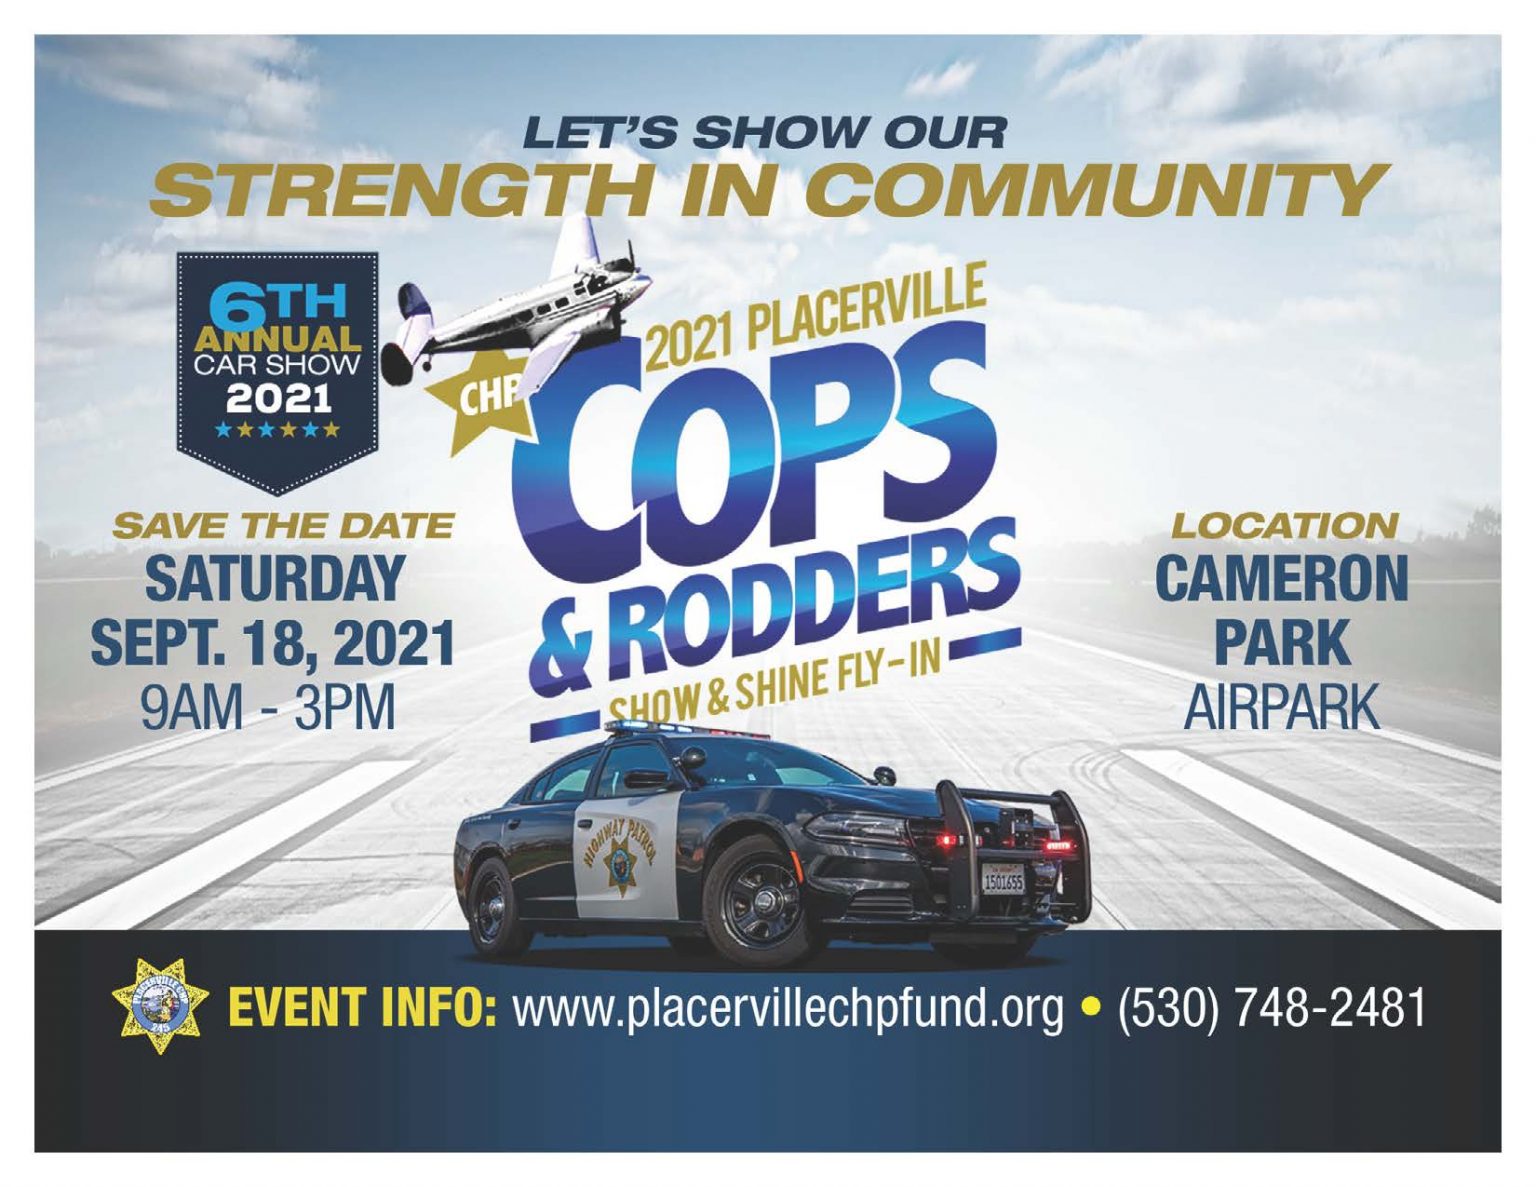 Cops & Rodders Show & Shine NorCal Car Culture